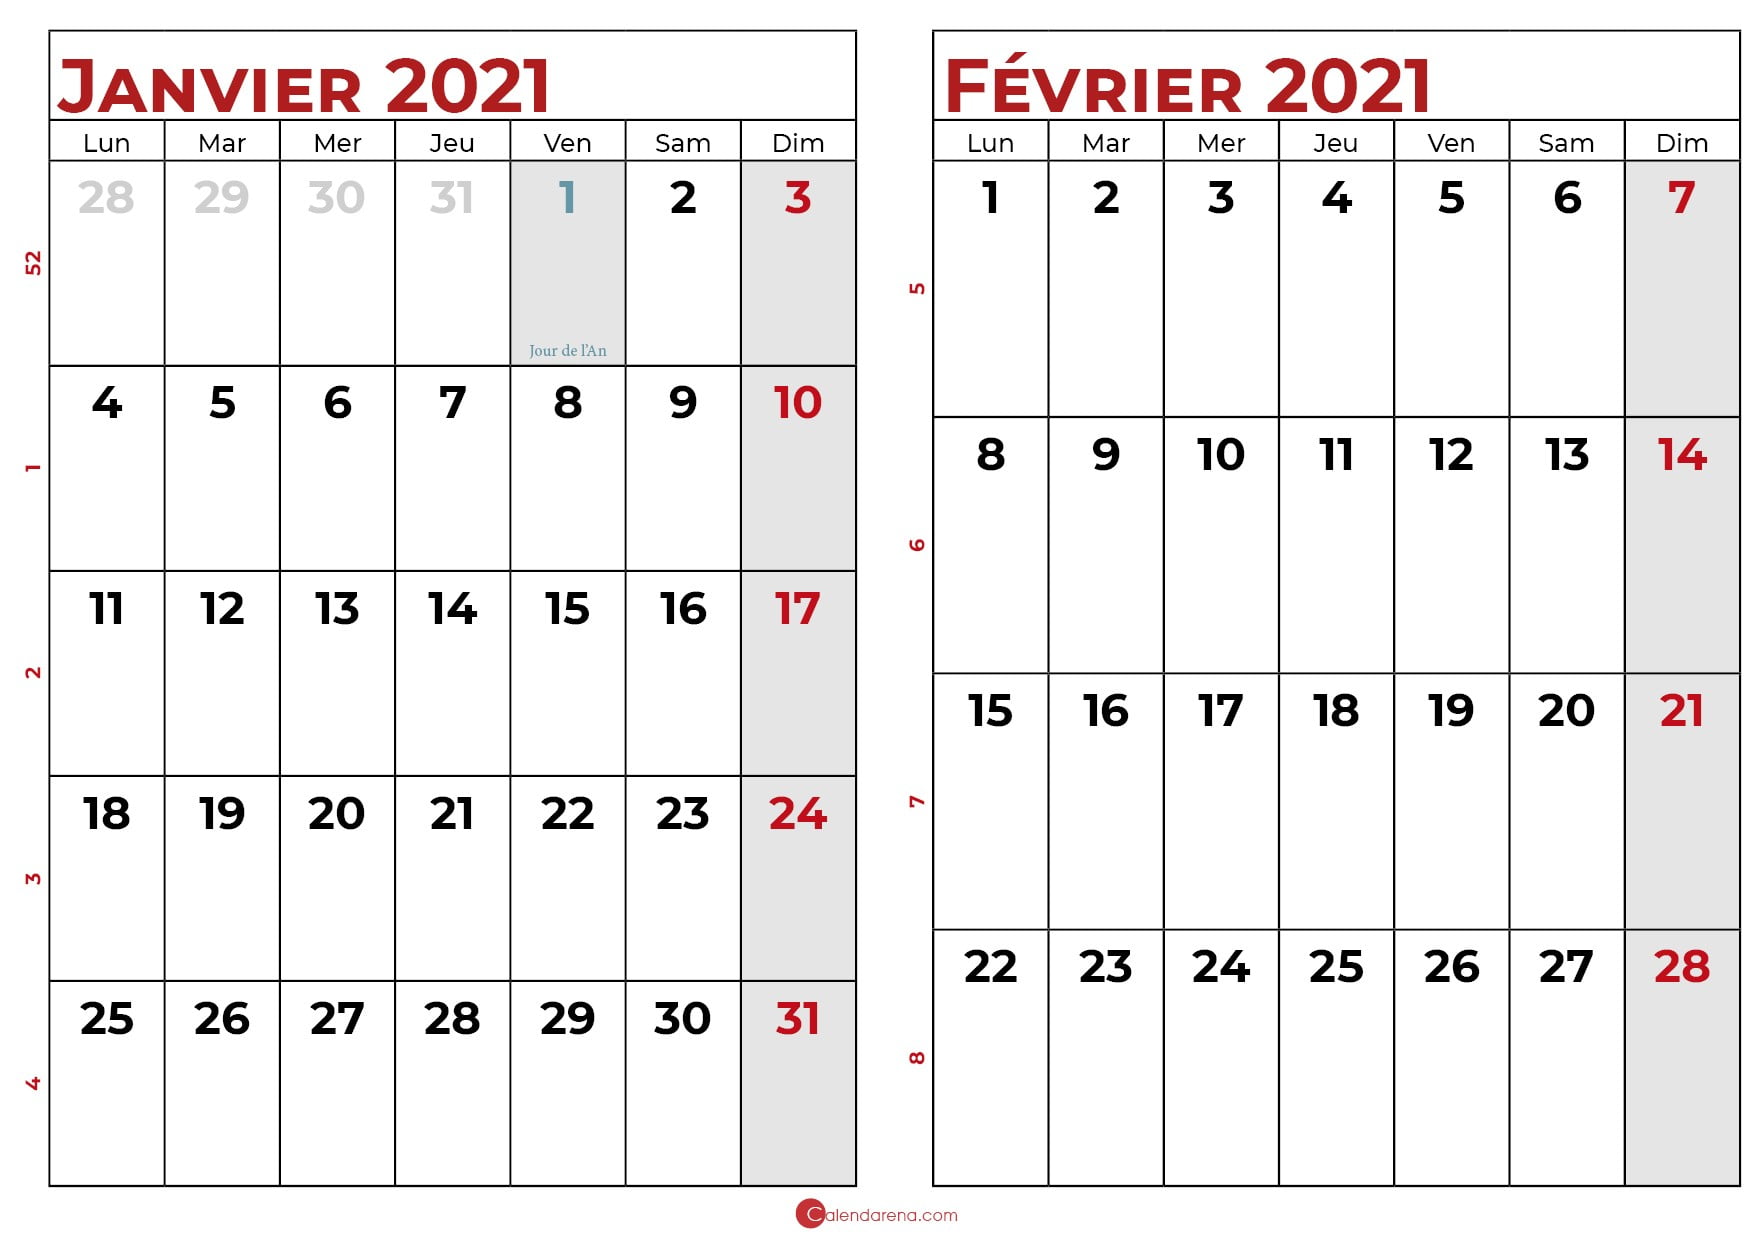 calendrier janvier fevrier 2021